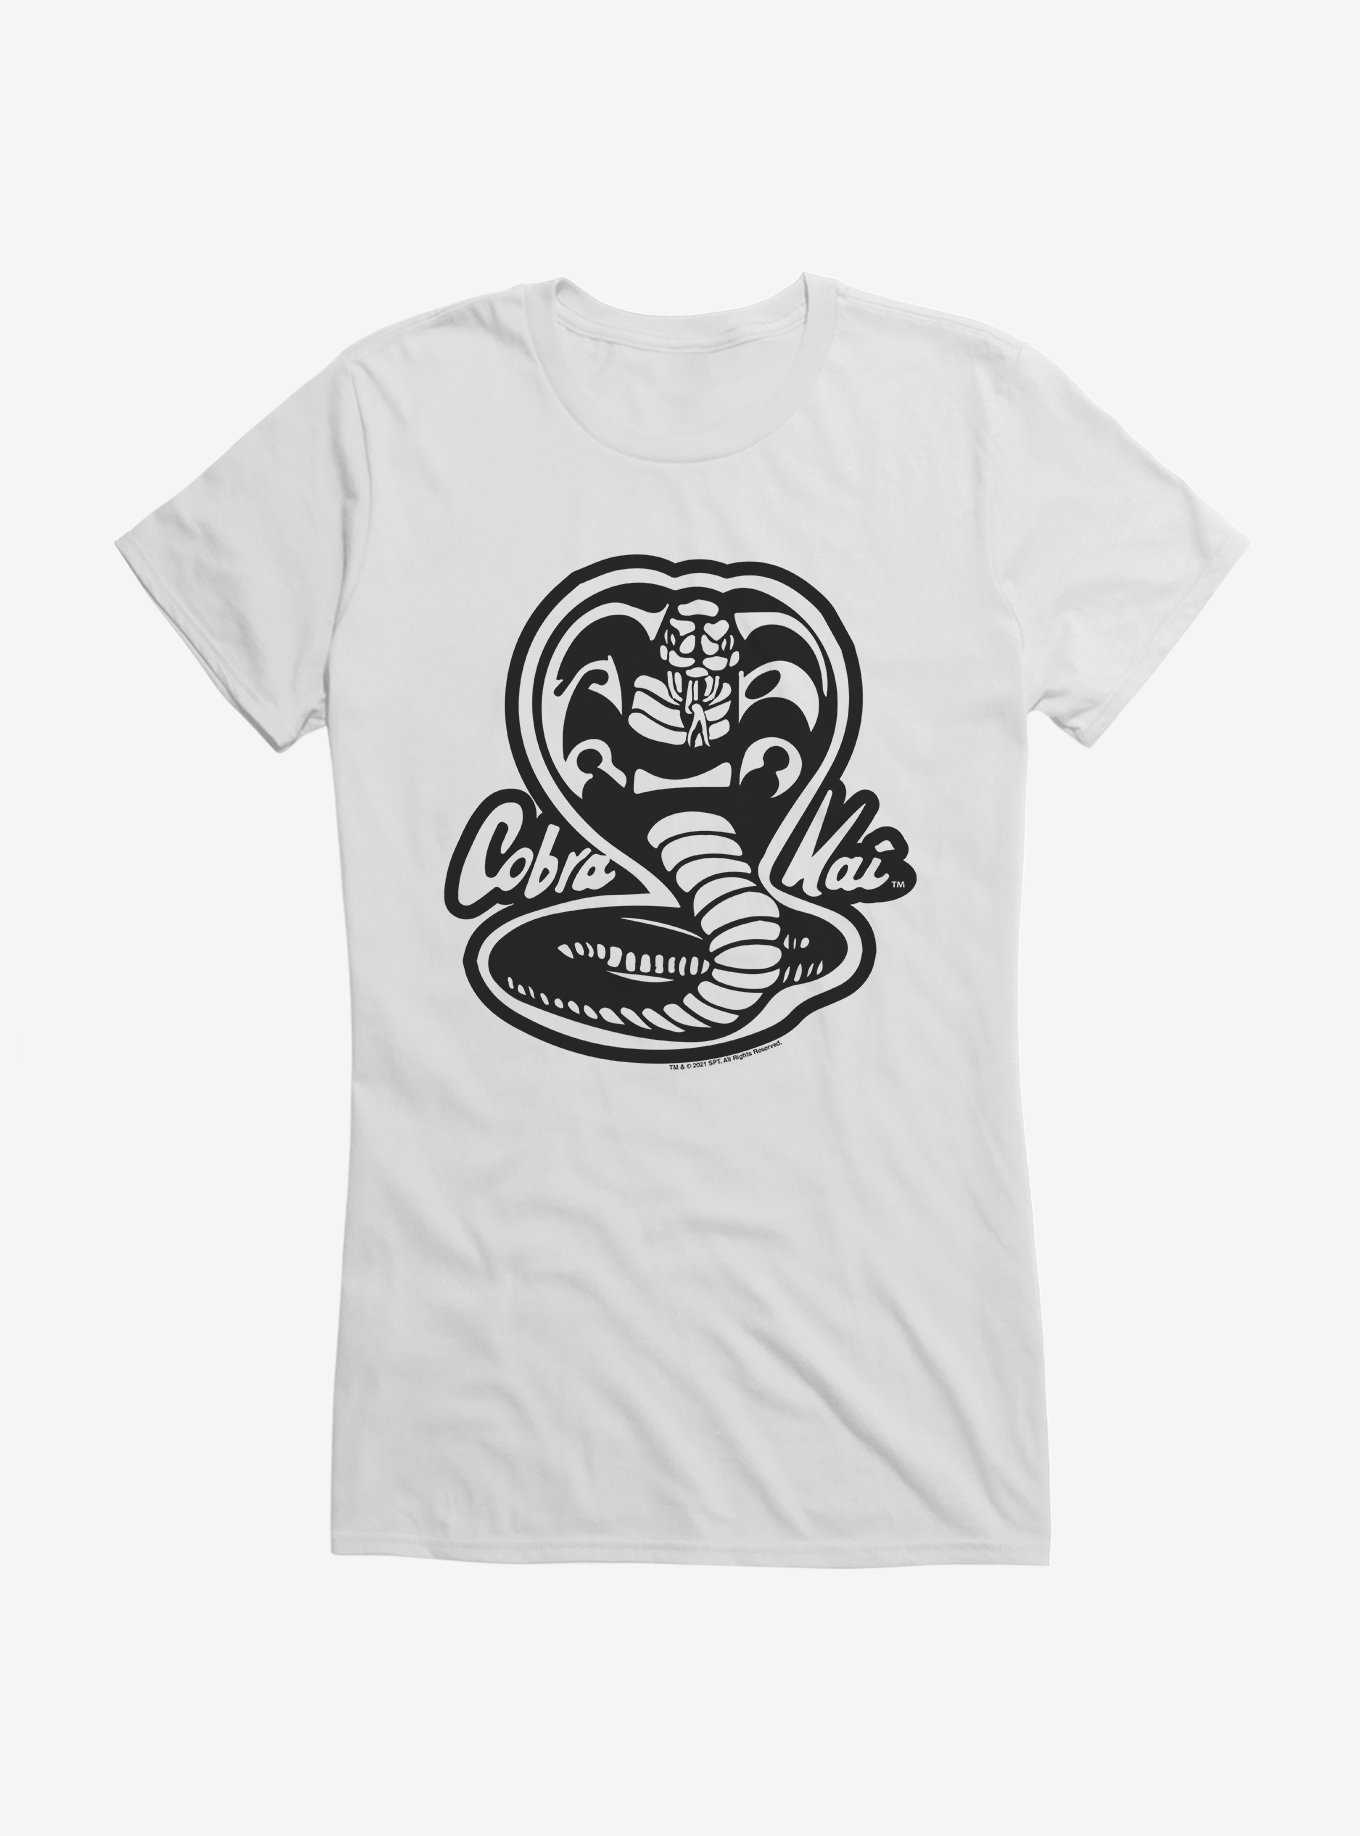 Cobra Kai Black And White Logo Girls T-Shirt, , hi-res